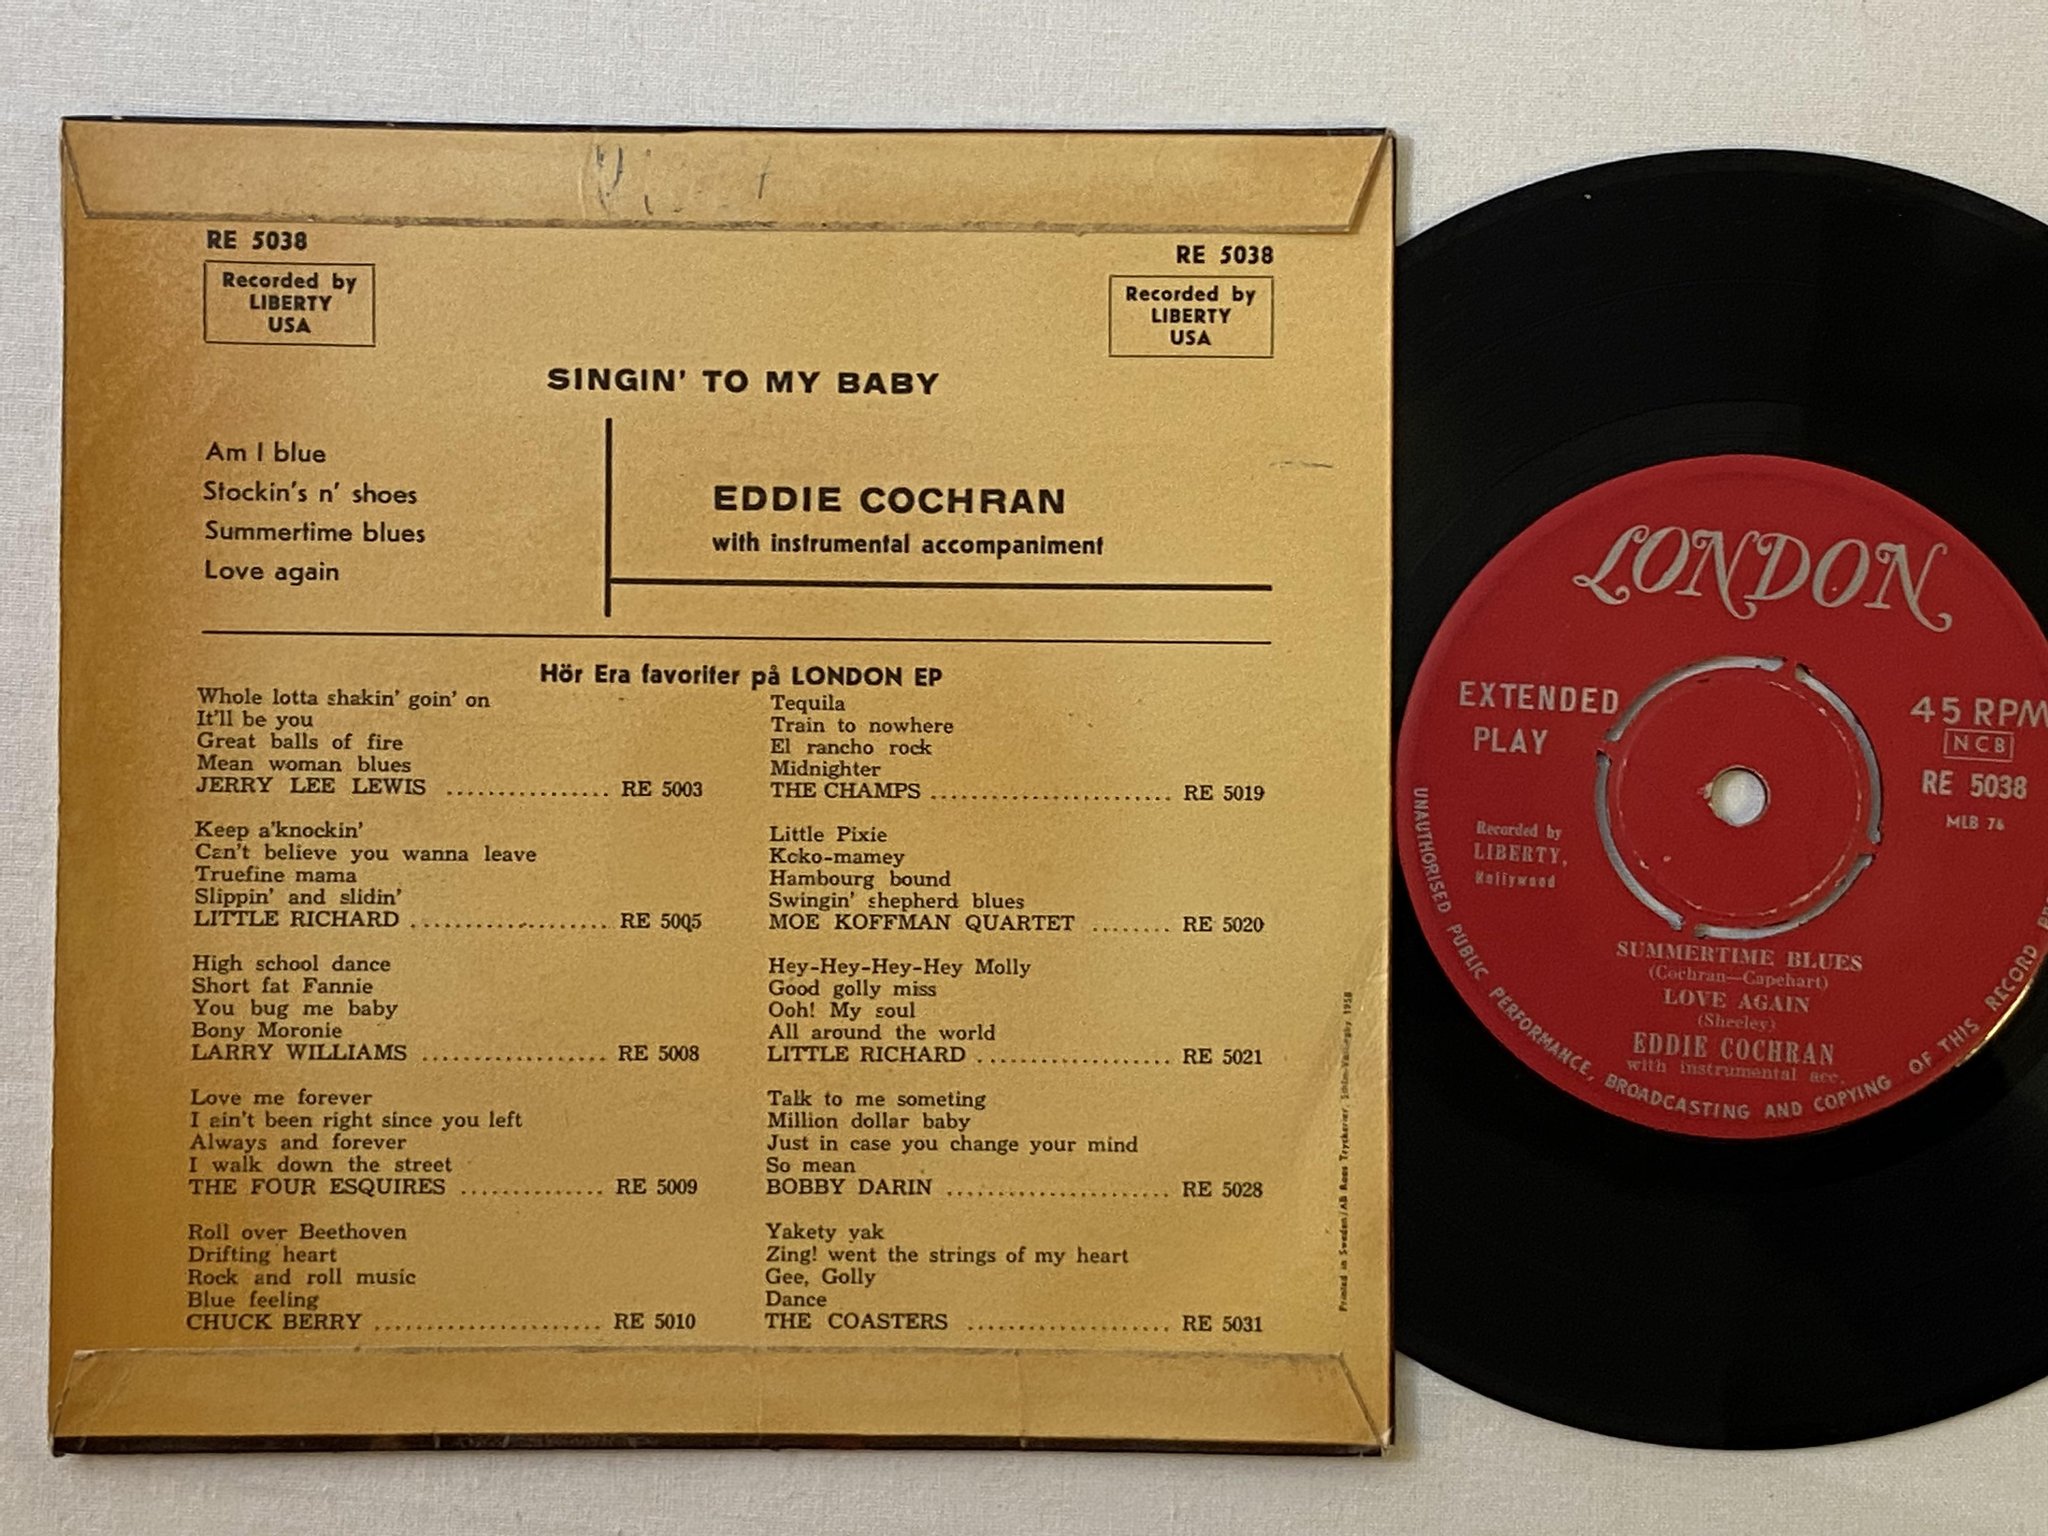 Omslagsbild för skivan EDDIE COCHRAN singin' to my baby 7"ep -58 Swe LONDON RE 5038 ** mega rare **